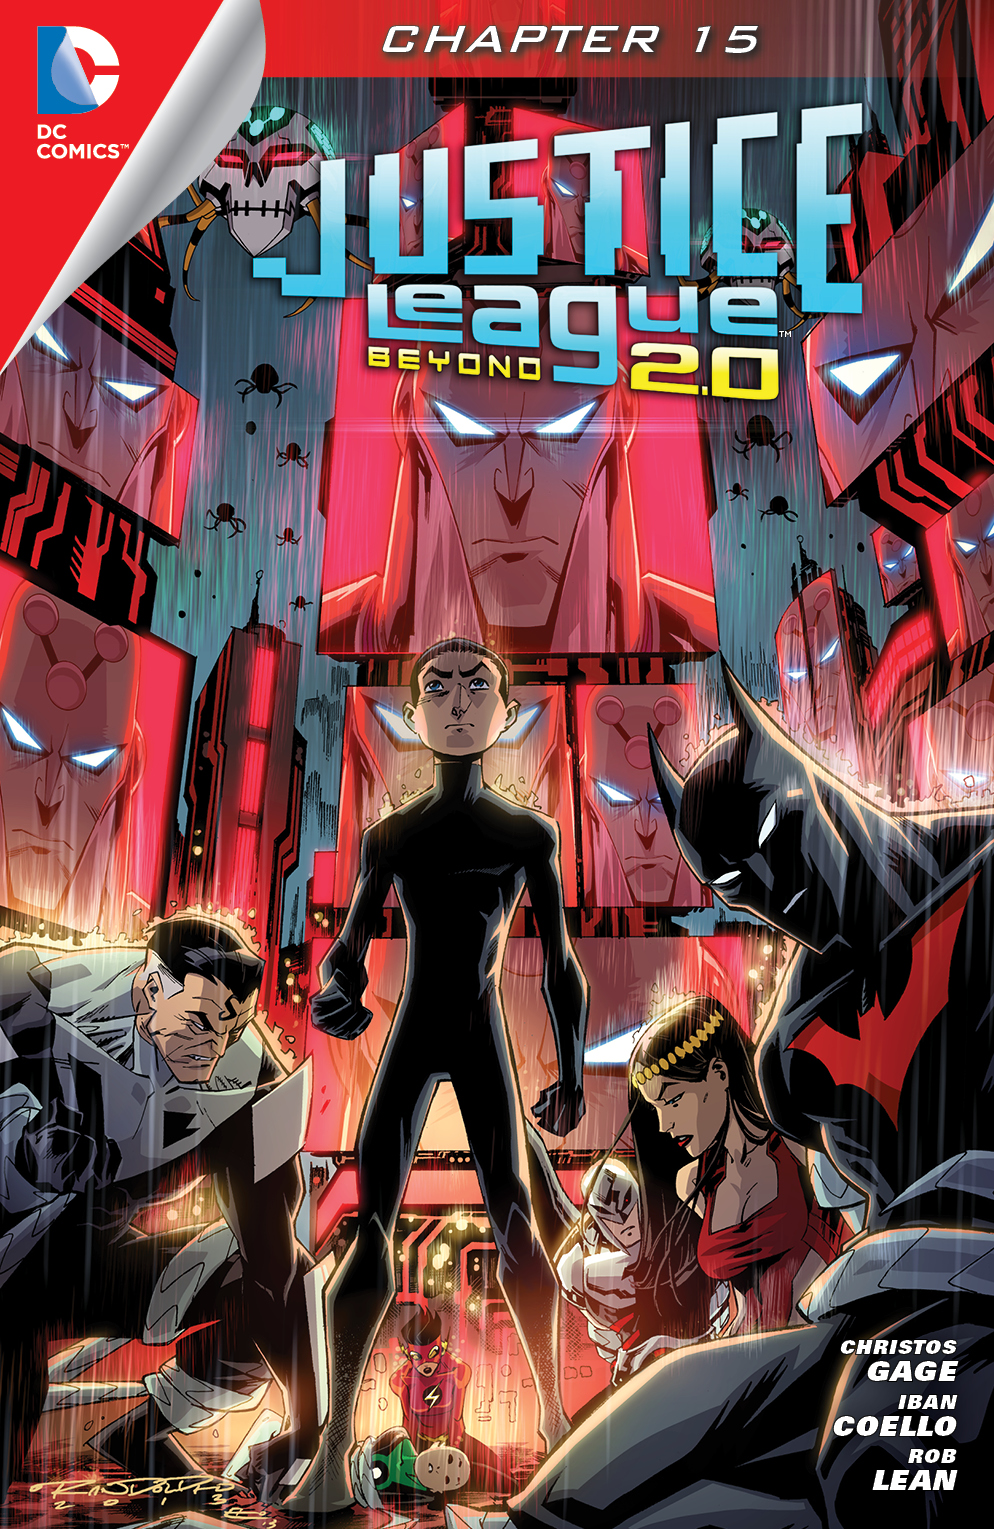 Justice League Beyond 2.0 #15 preview images